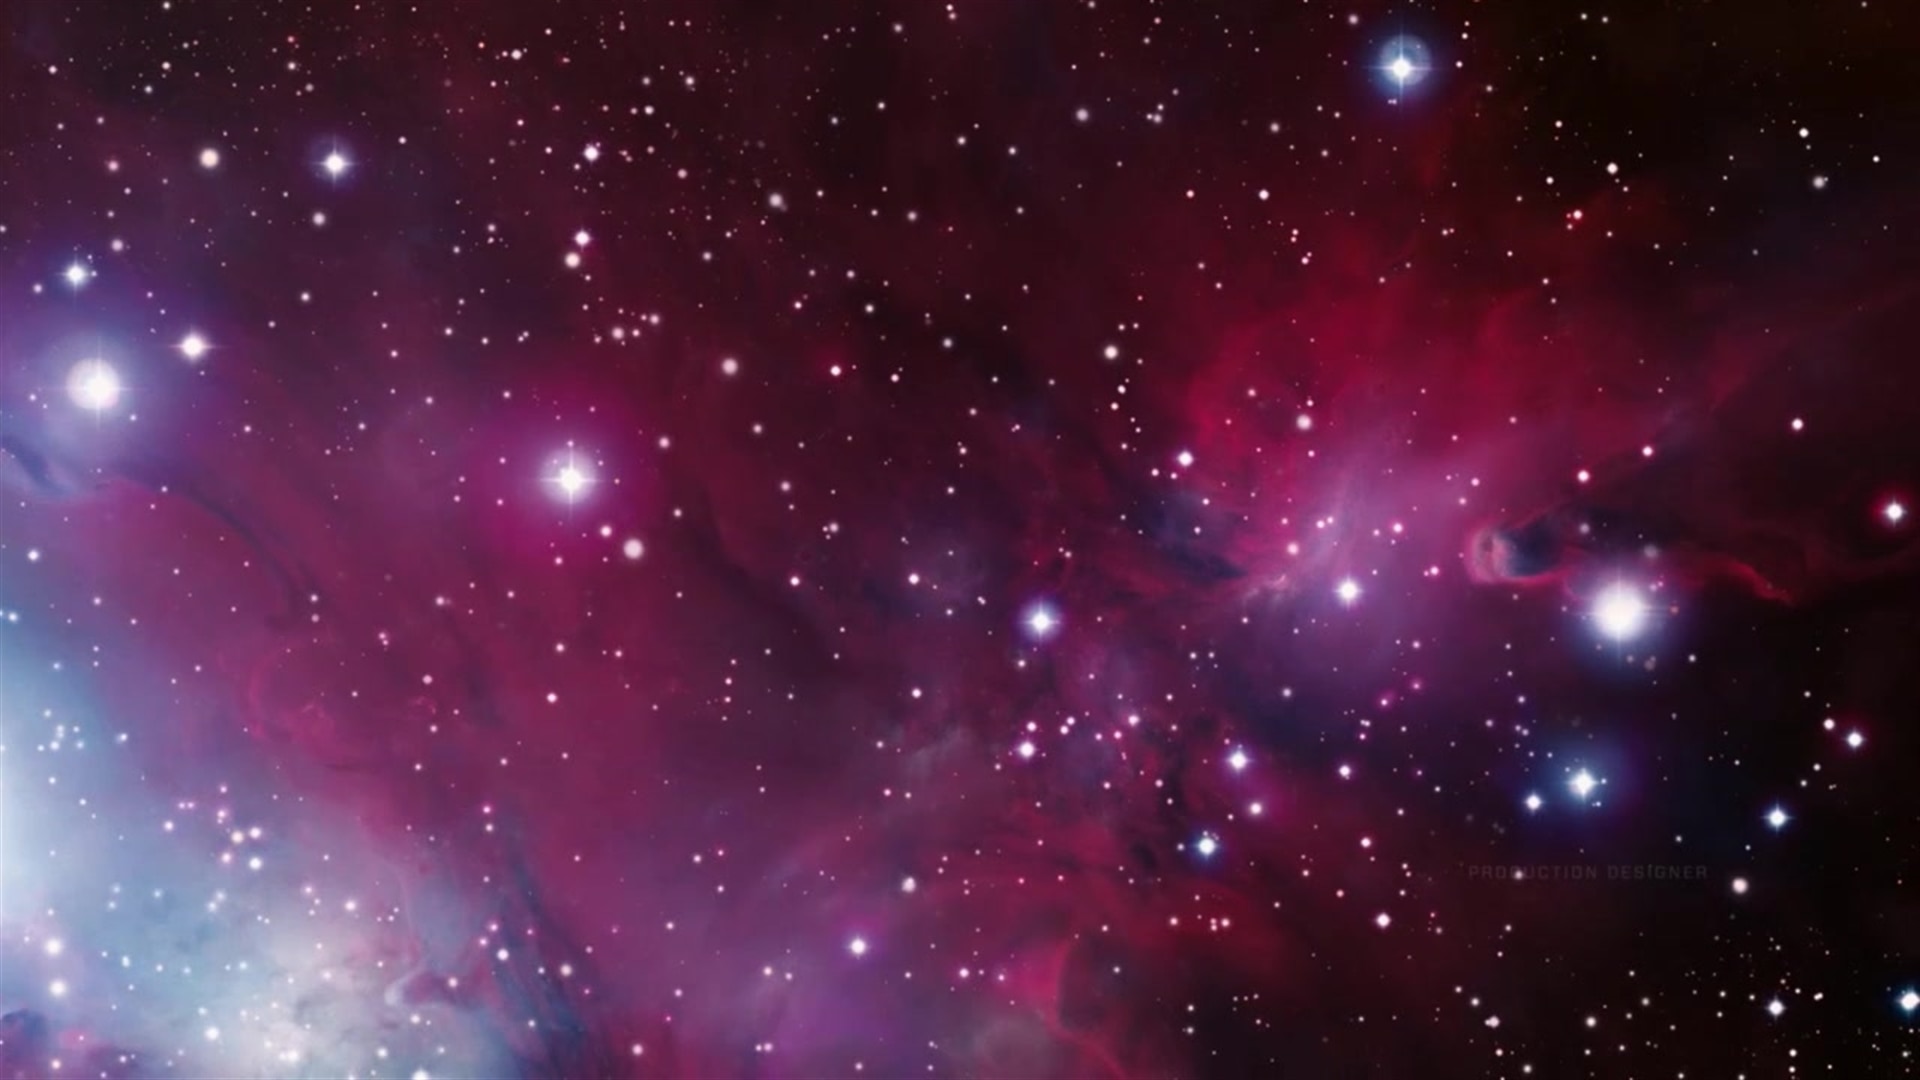 cosmos a spacetime odyssey episode 4